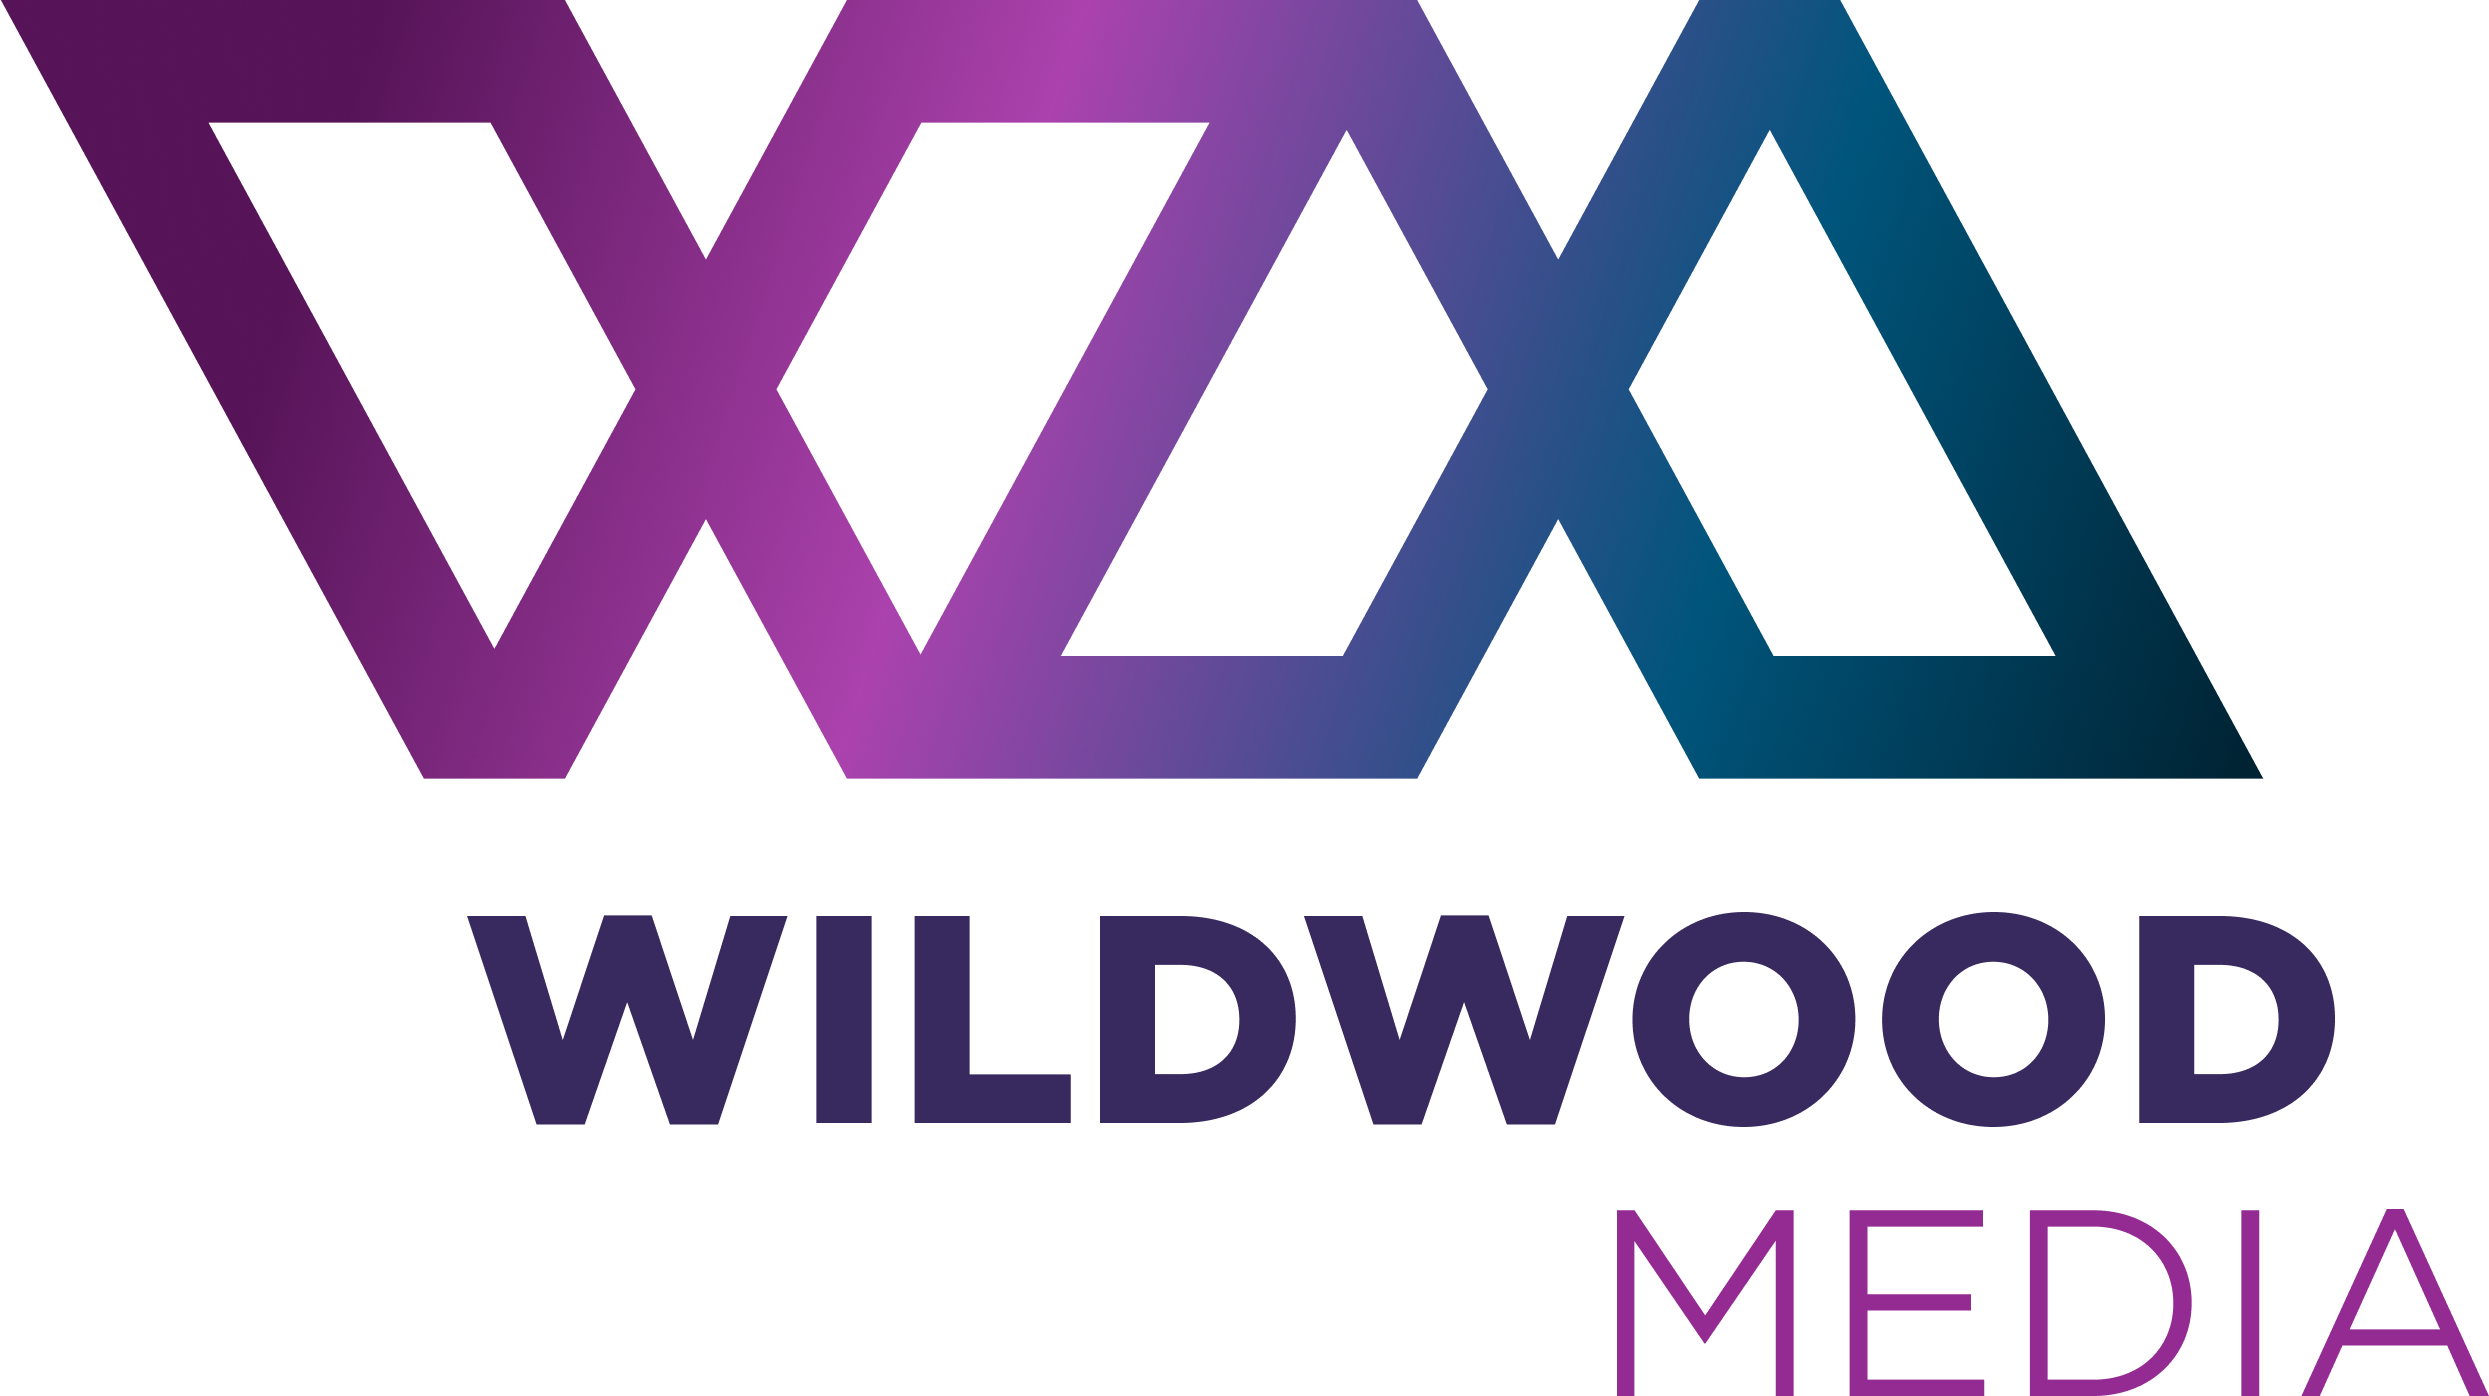 Wildwood Media Ltd logo